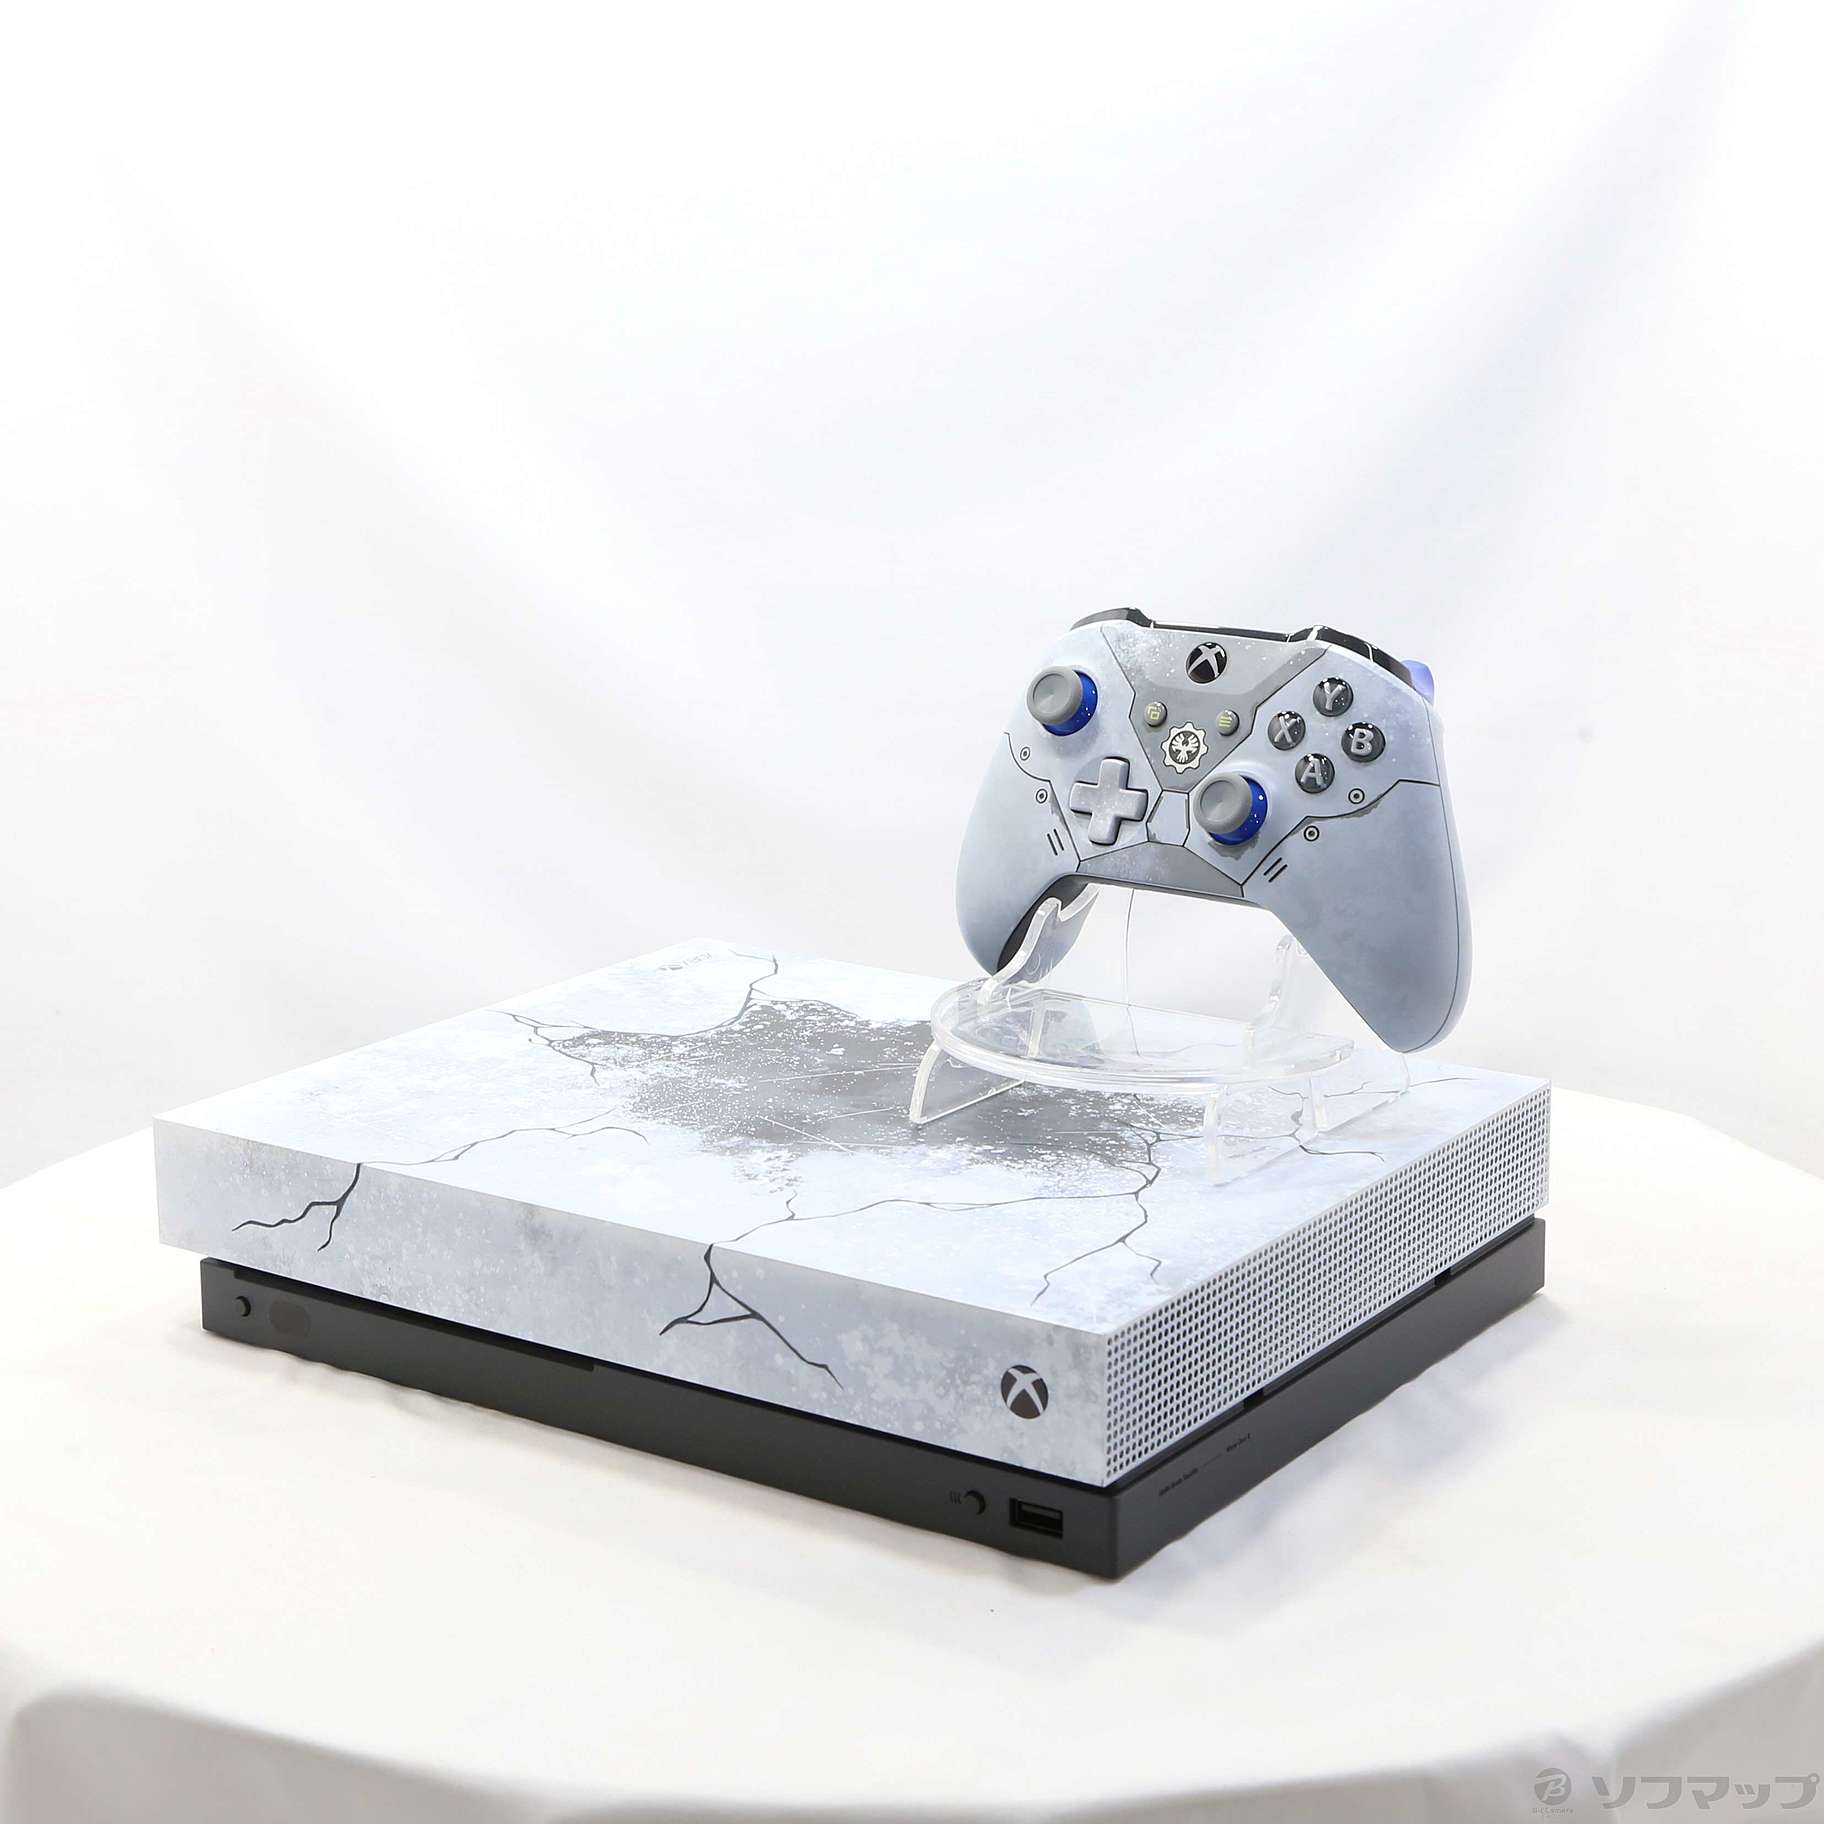 Xbox One X Gears 5 リミテッド エディション